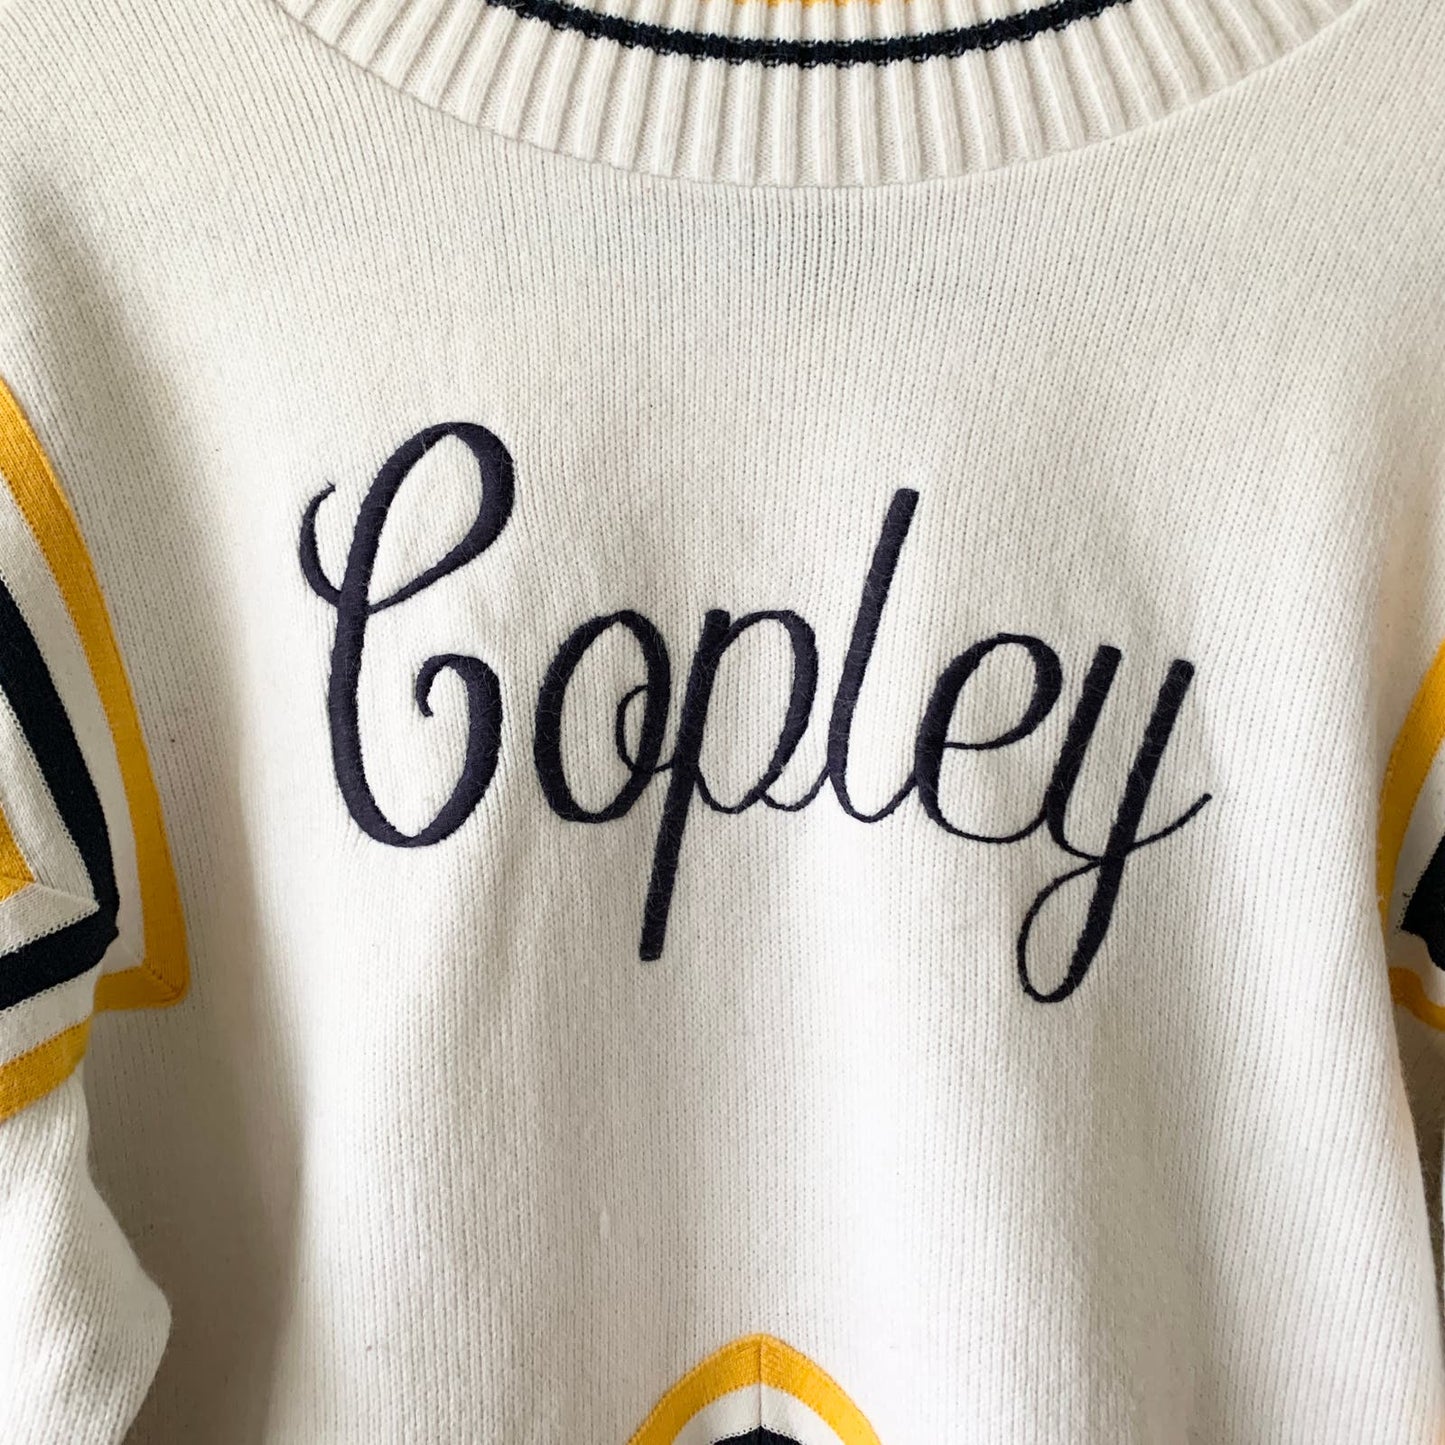 Vintage Cheerleader Varsity Sweater Copley High School Ohio Blue Yellow White